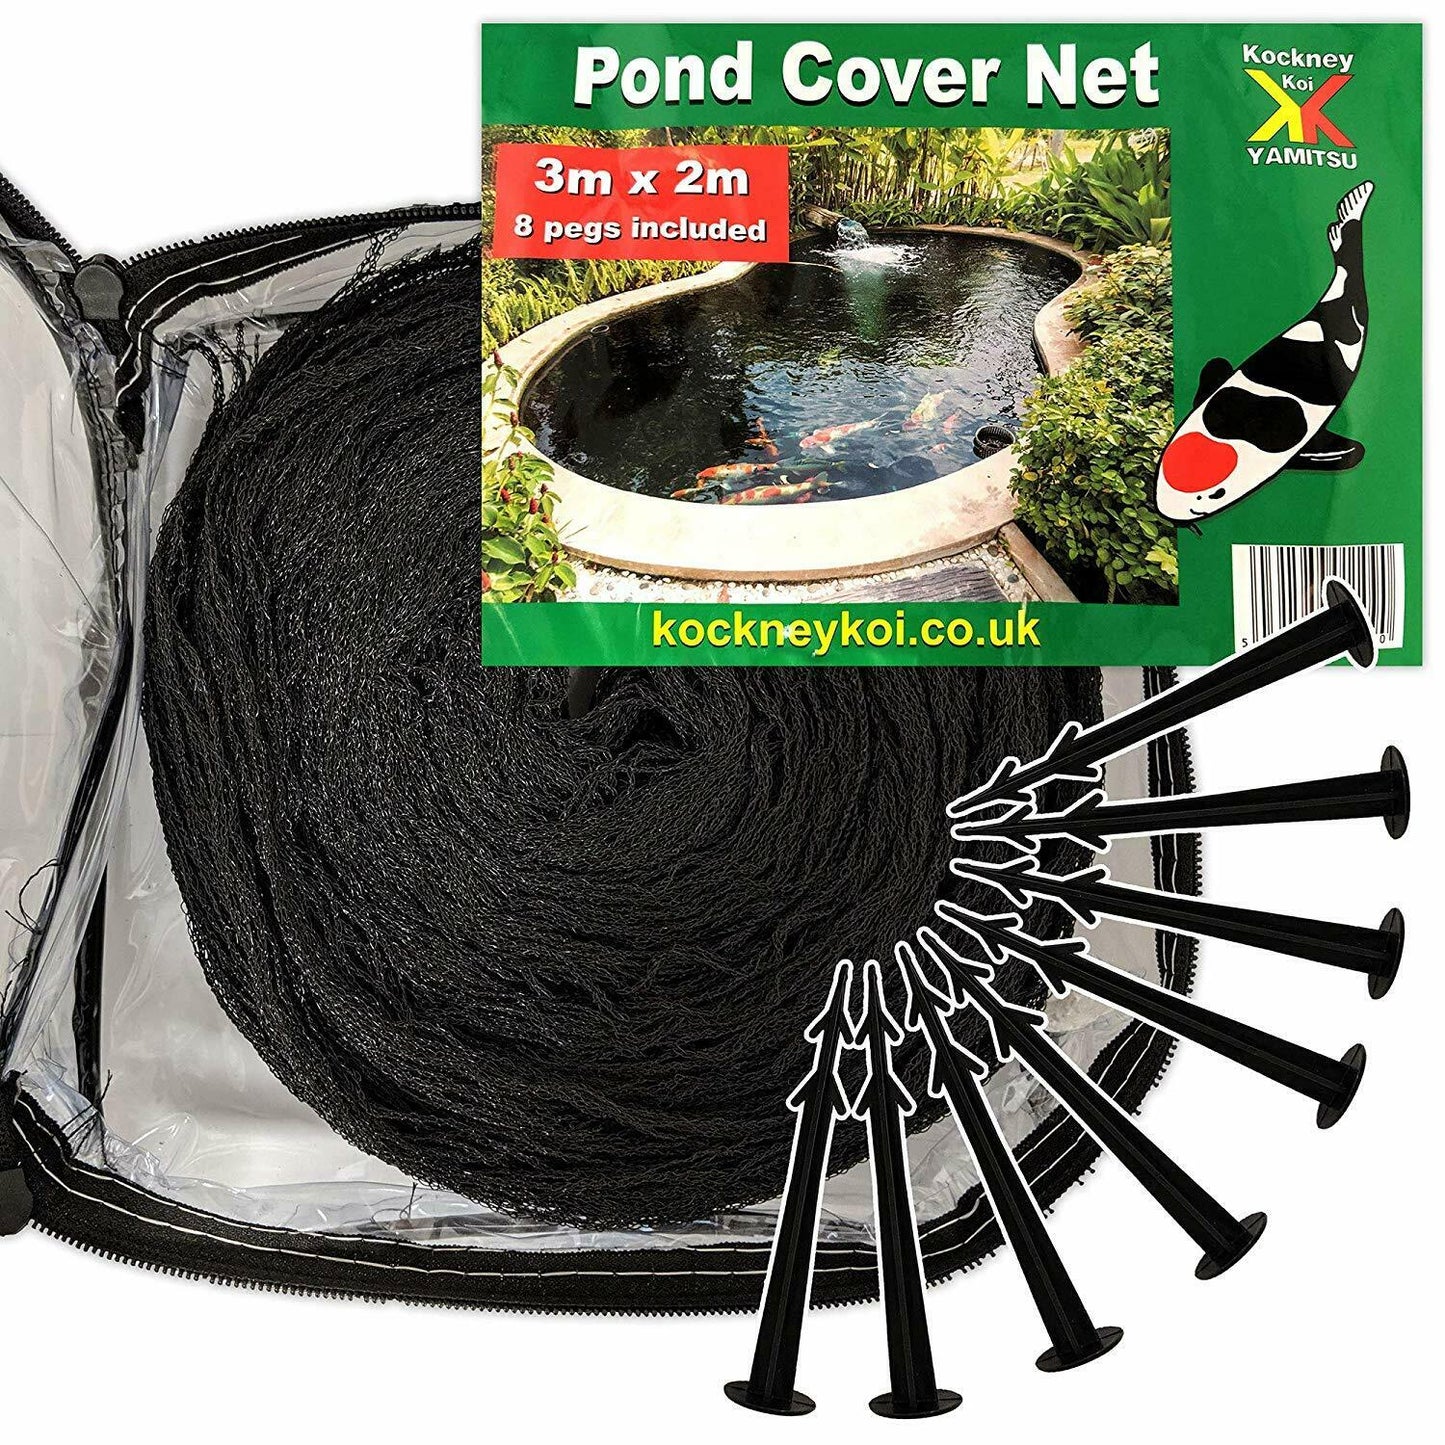 Yamitsu Pond Cover Netting and Pegs